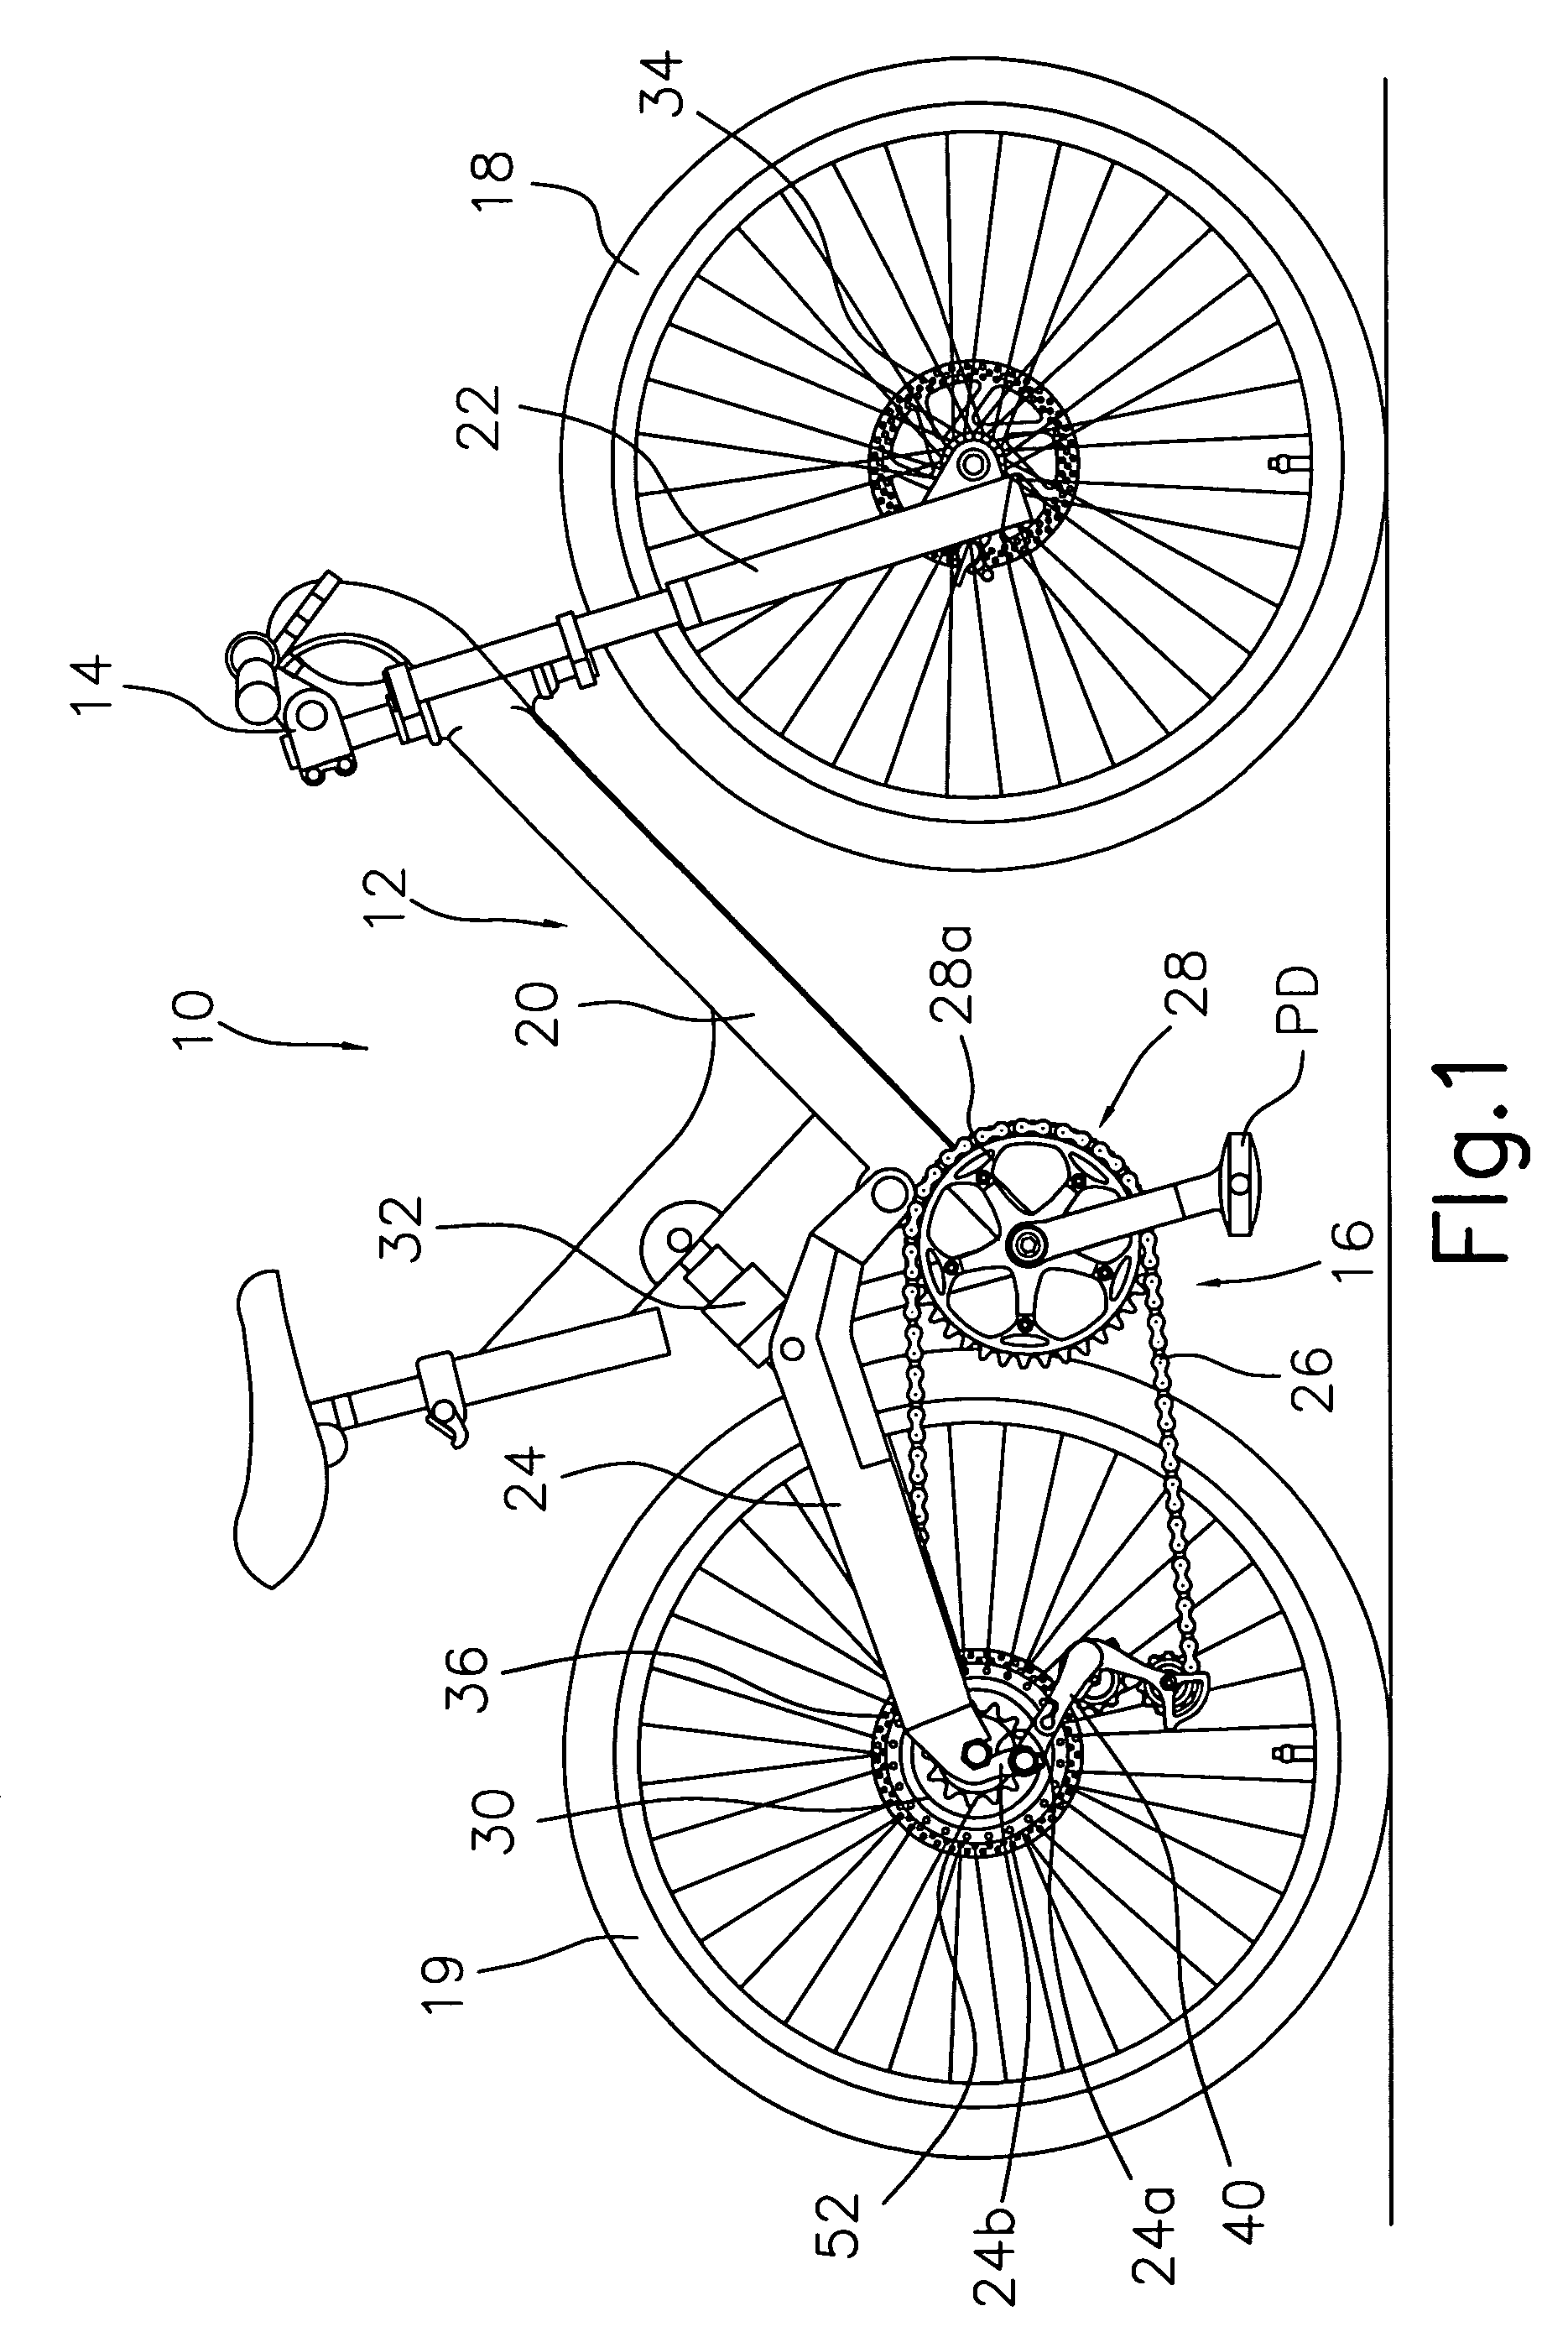 Bicycle wheel hub cover